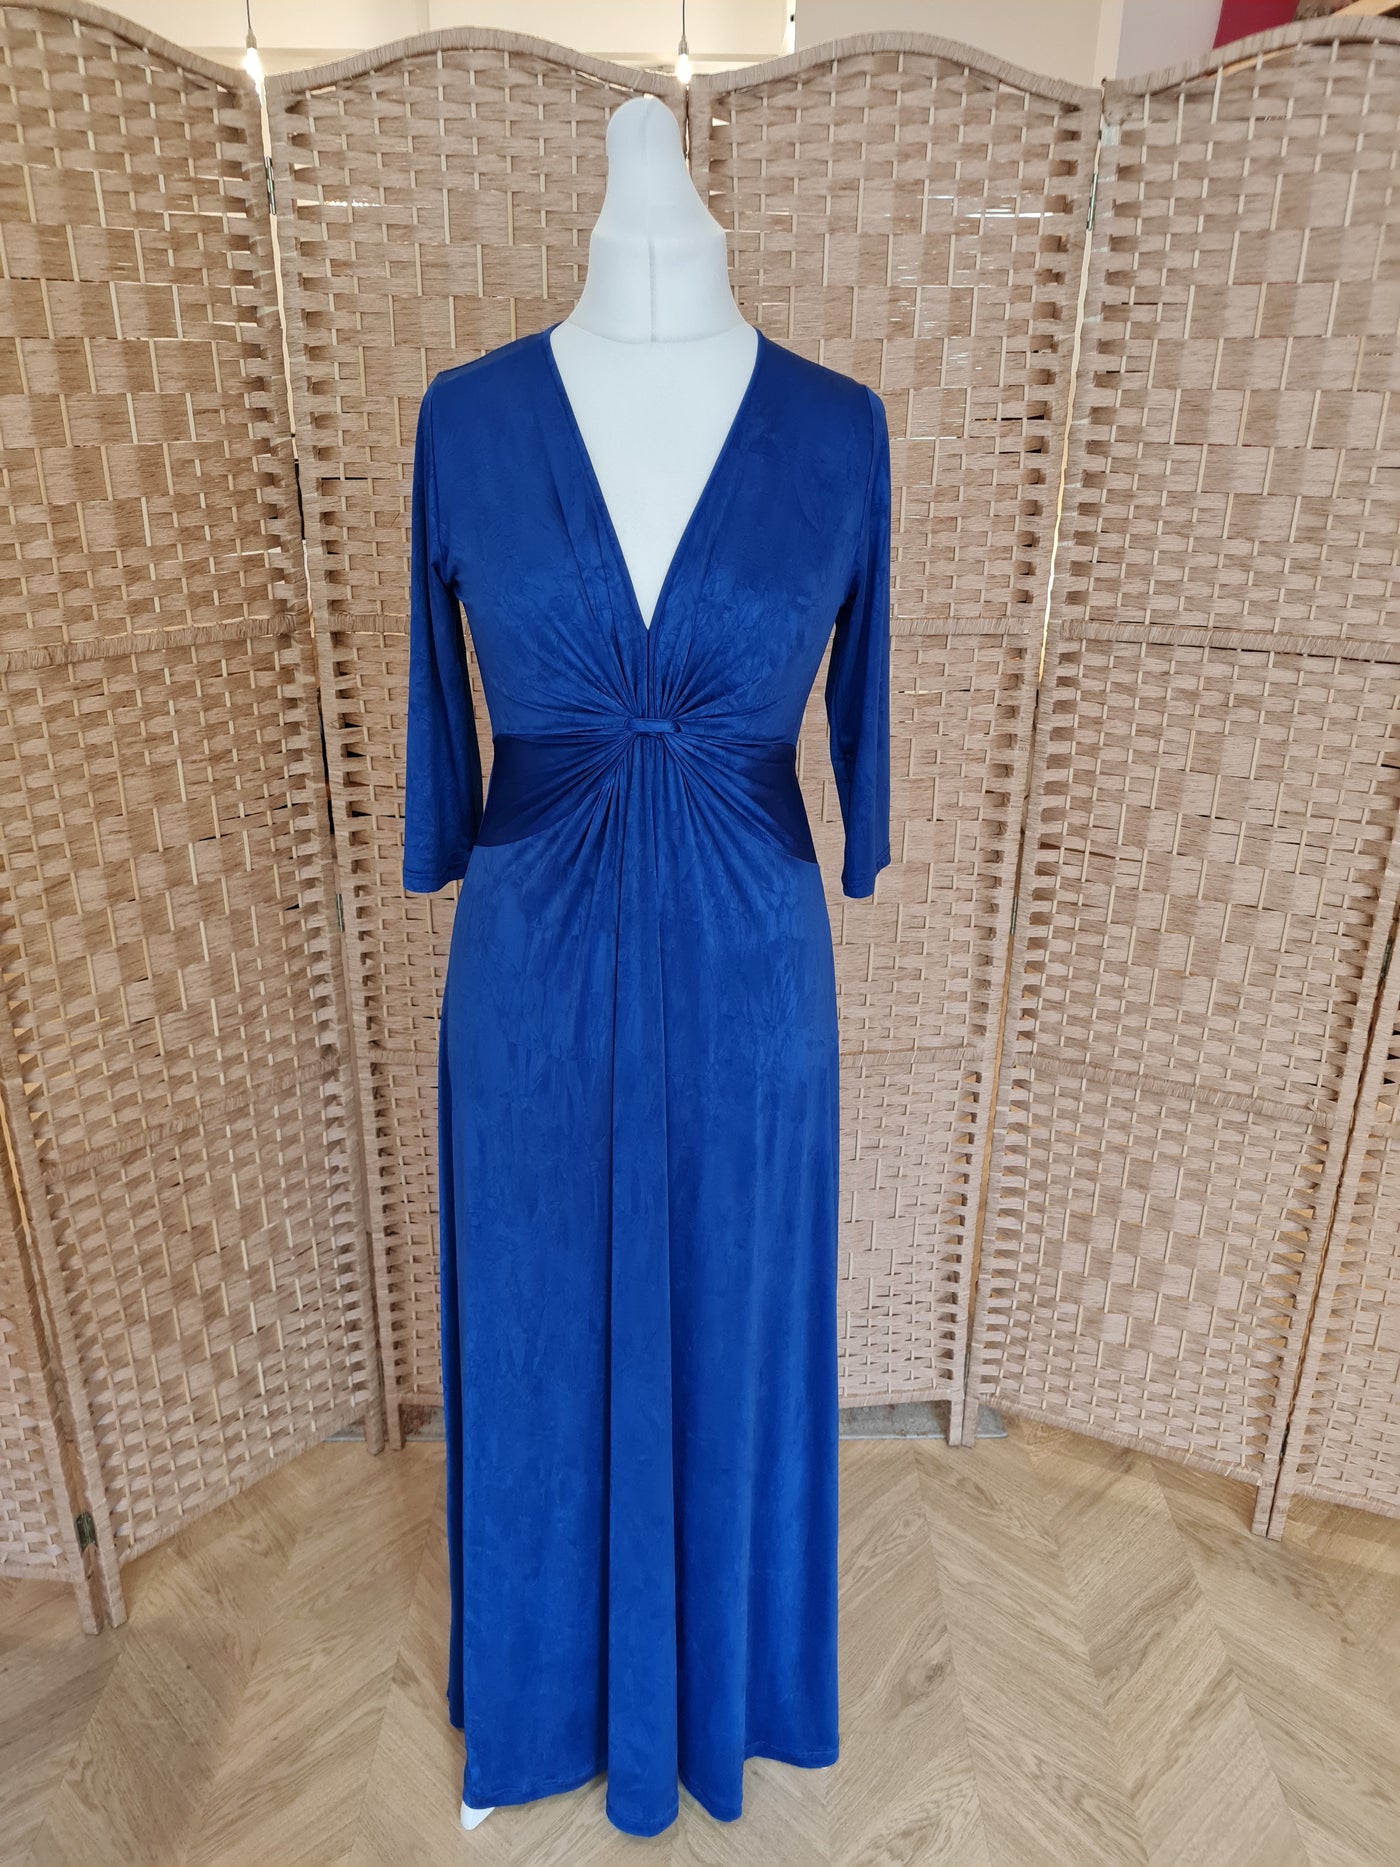 Ingenue Blue Knot front Dress 14